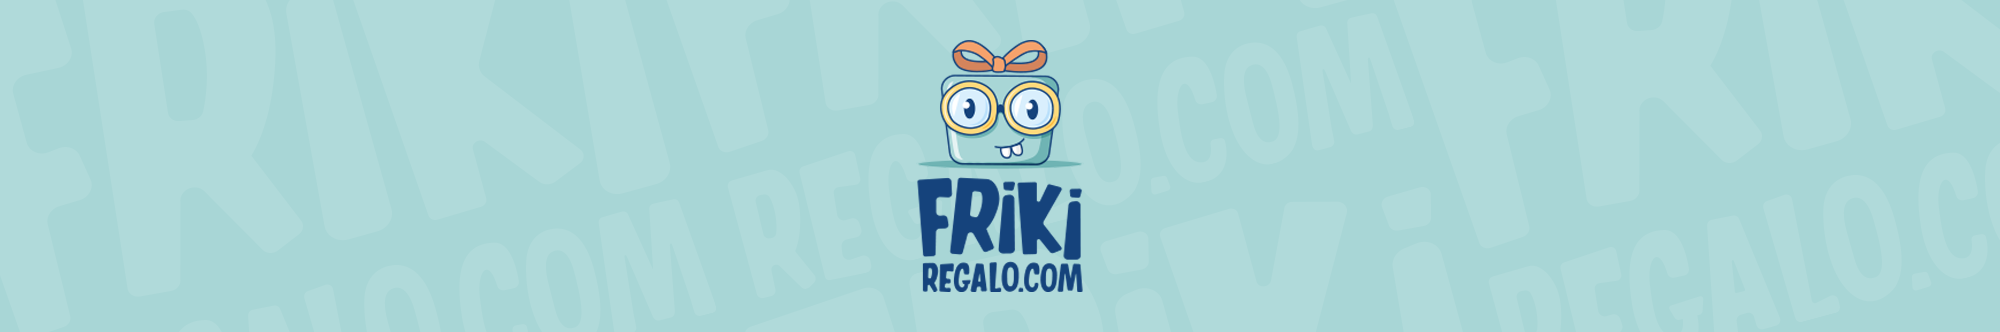 Regalos Frikis merchandising regalo original divertido